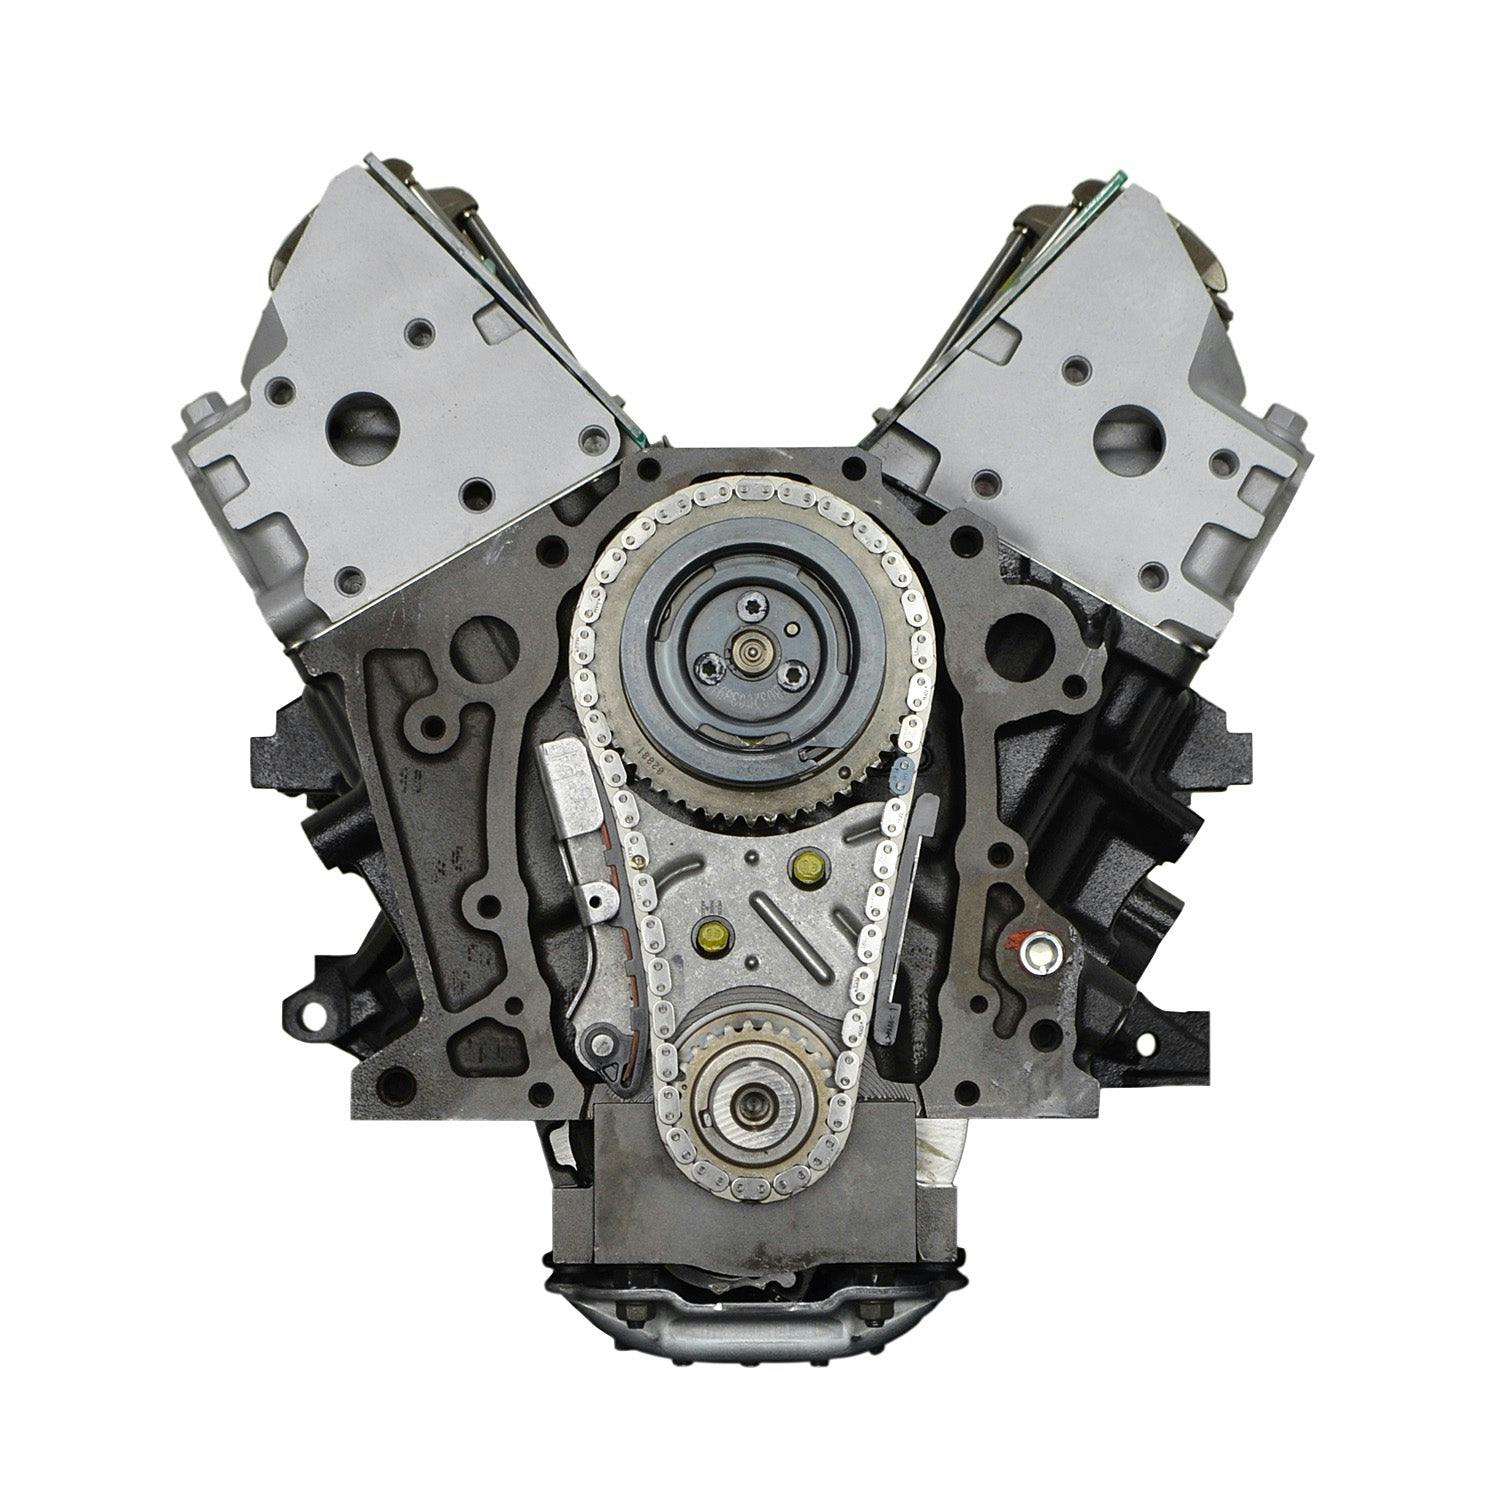 3.5L V6 Engine for 2007-2010 Chevrolet Impala, Malibu, Monte Carlo/Pontiac G6